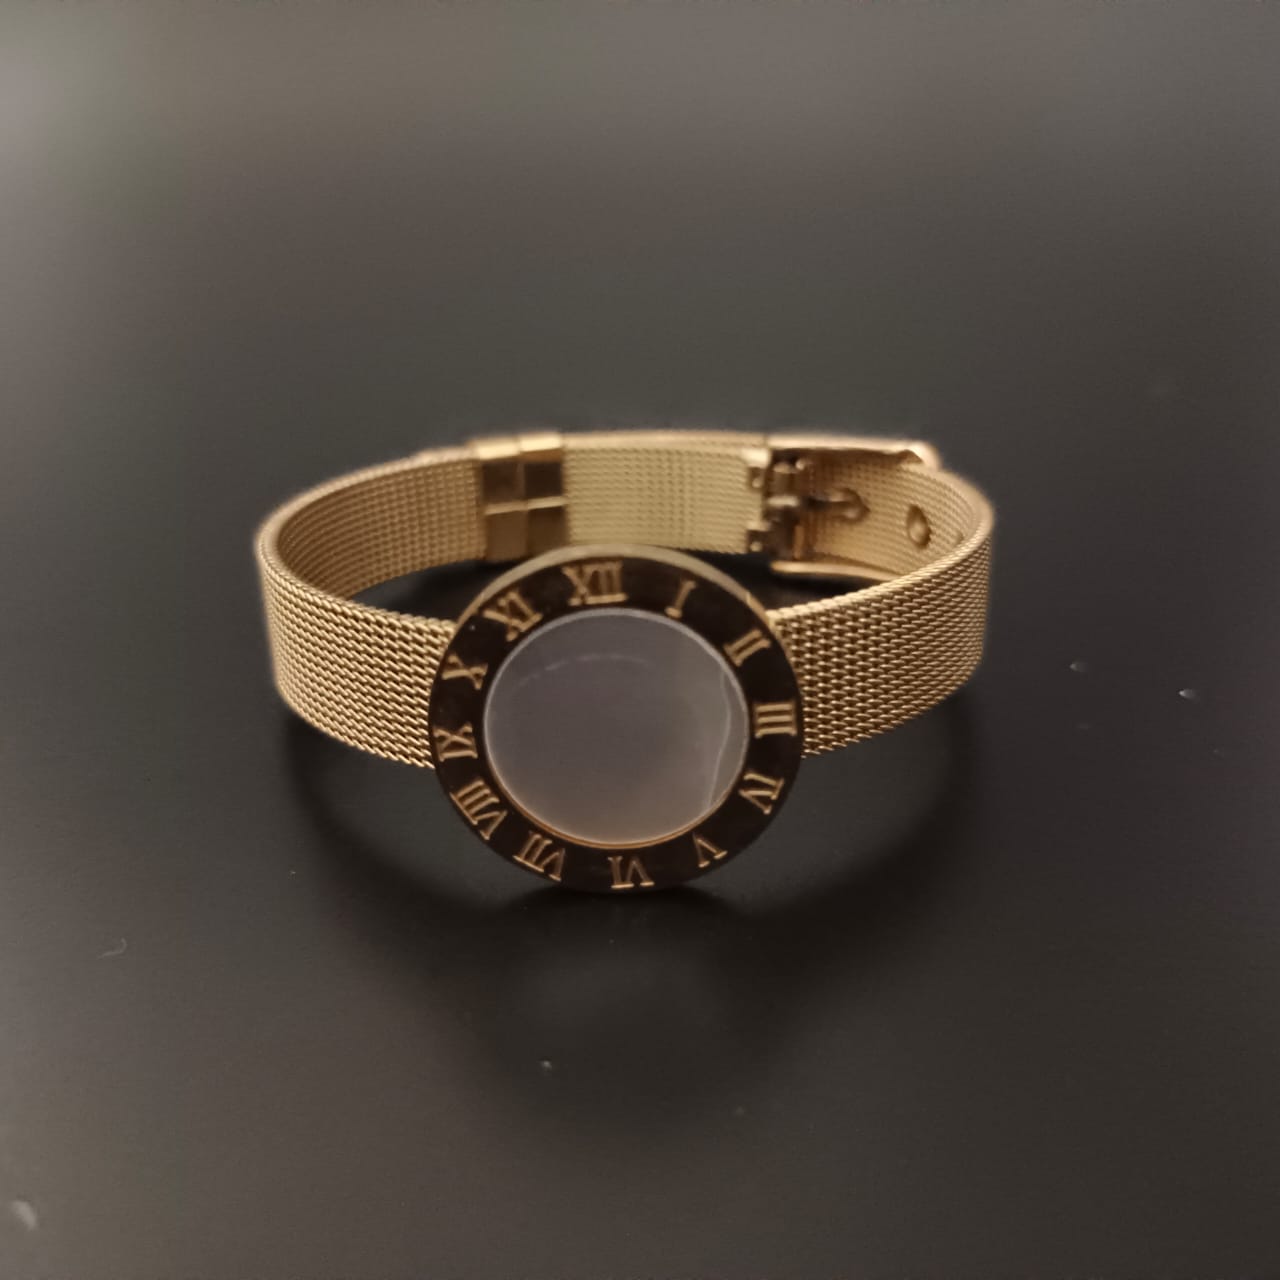 New Golden Watch Design Bracelet For Women and Girl- (White Gold Dial)